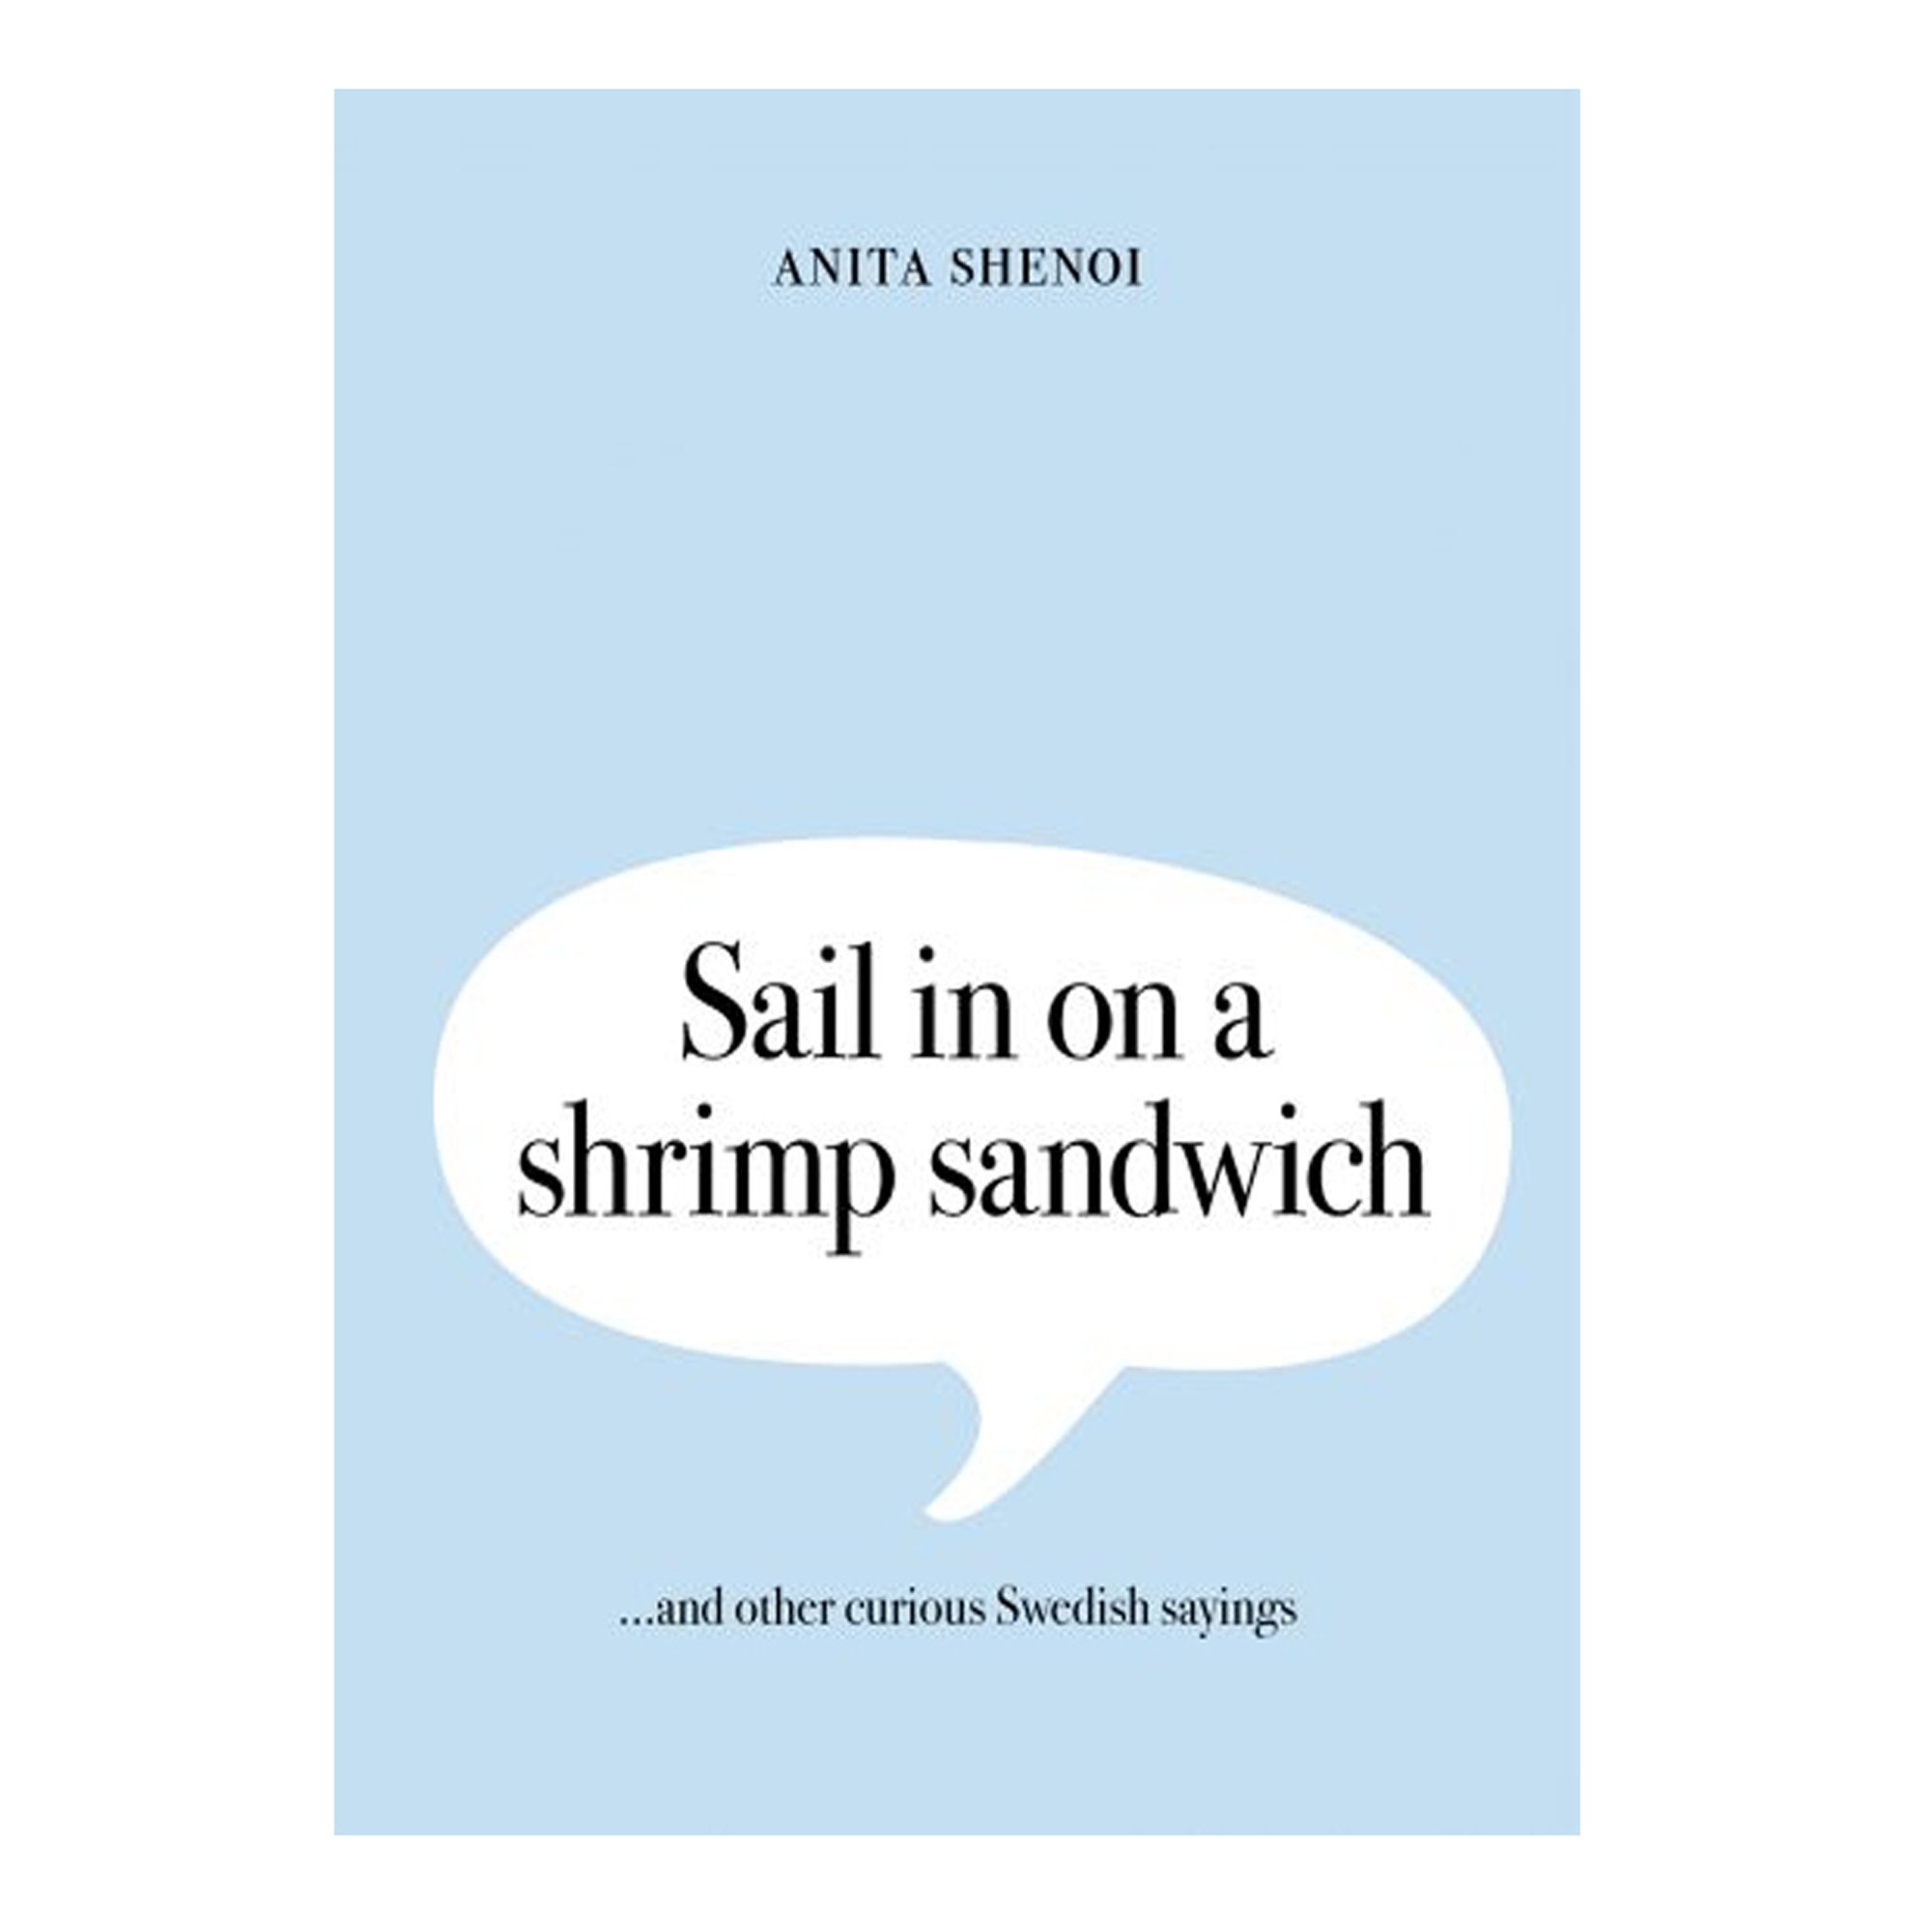 Bok Sail in on a shrimp sandwhichproduktzoombild #1